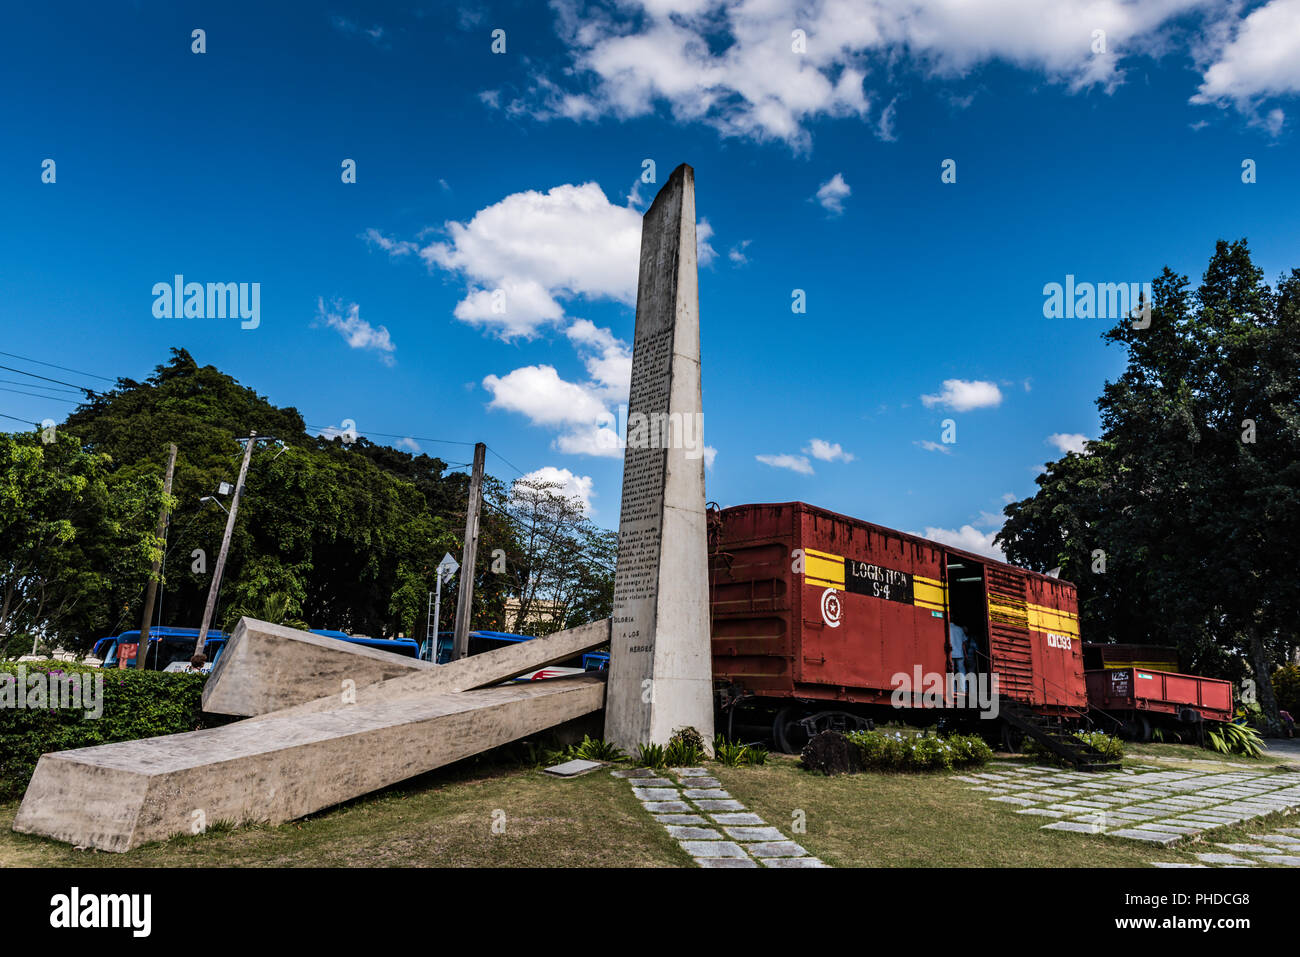 Santa Clara, Cuba / March 16, 2016: The Tren Blindado is a national monument, memorial park, and museum of the Cuban Revolution. Stock Photo